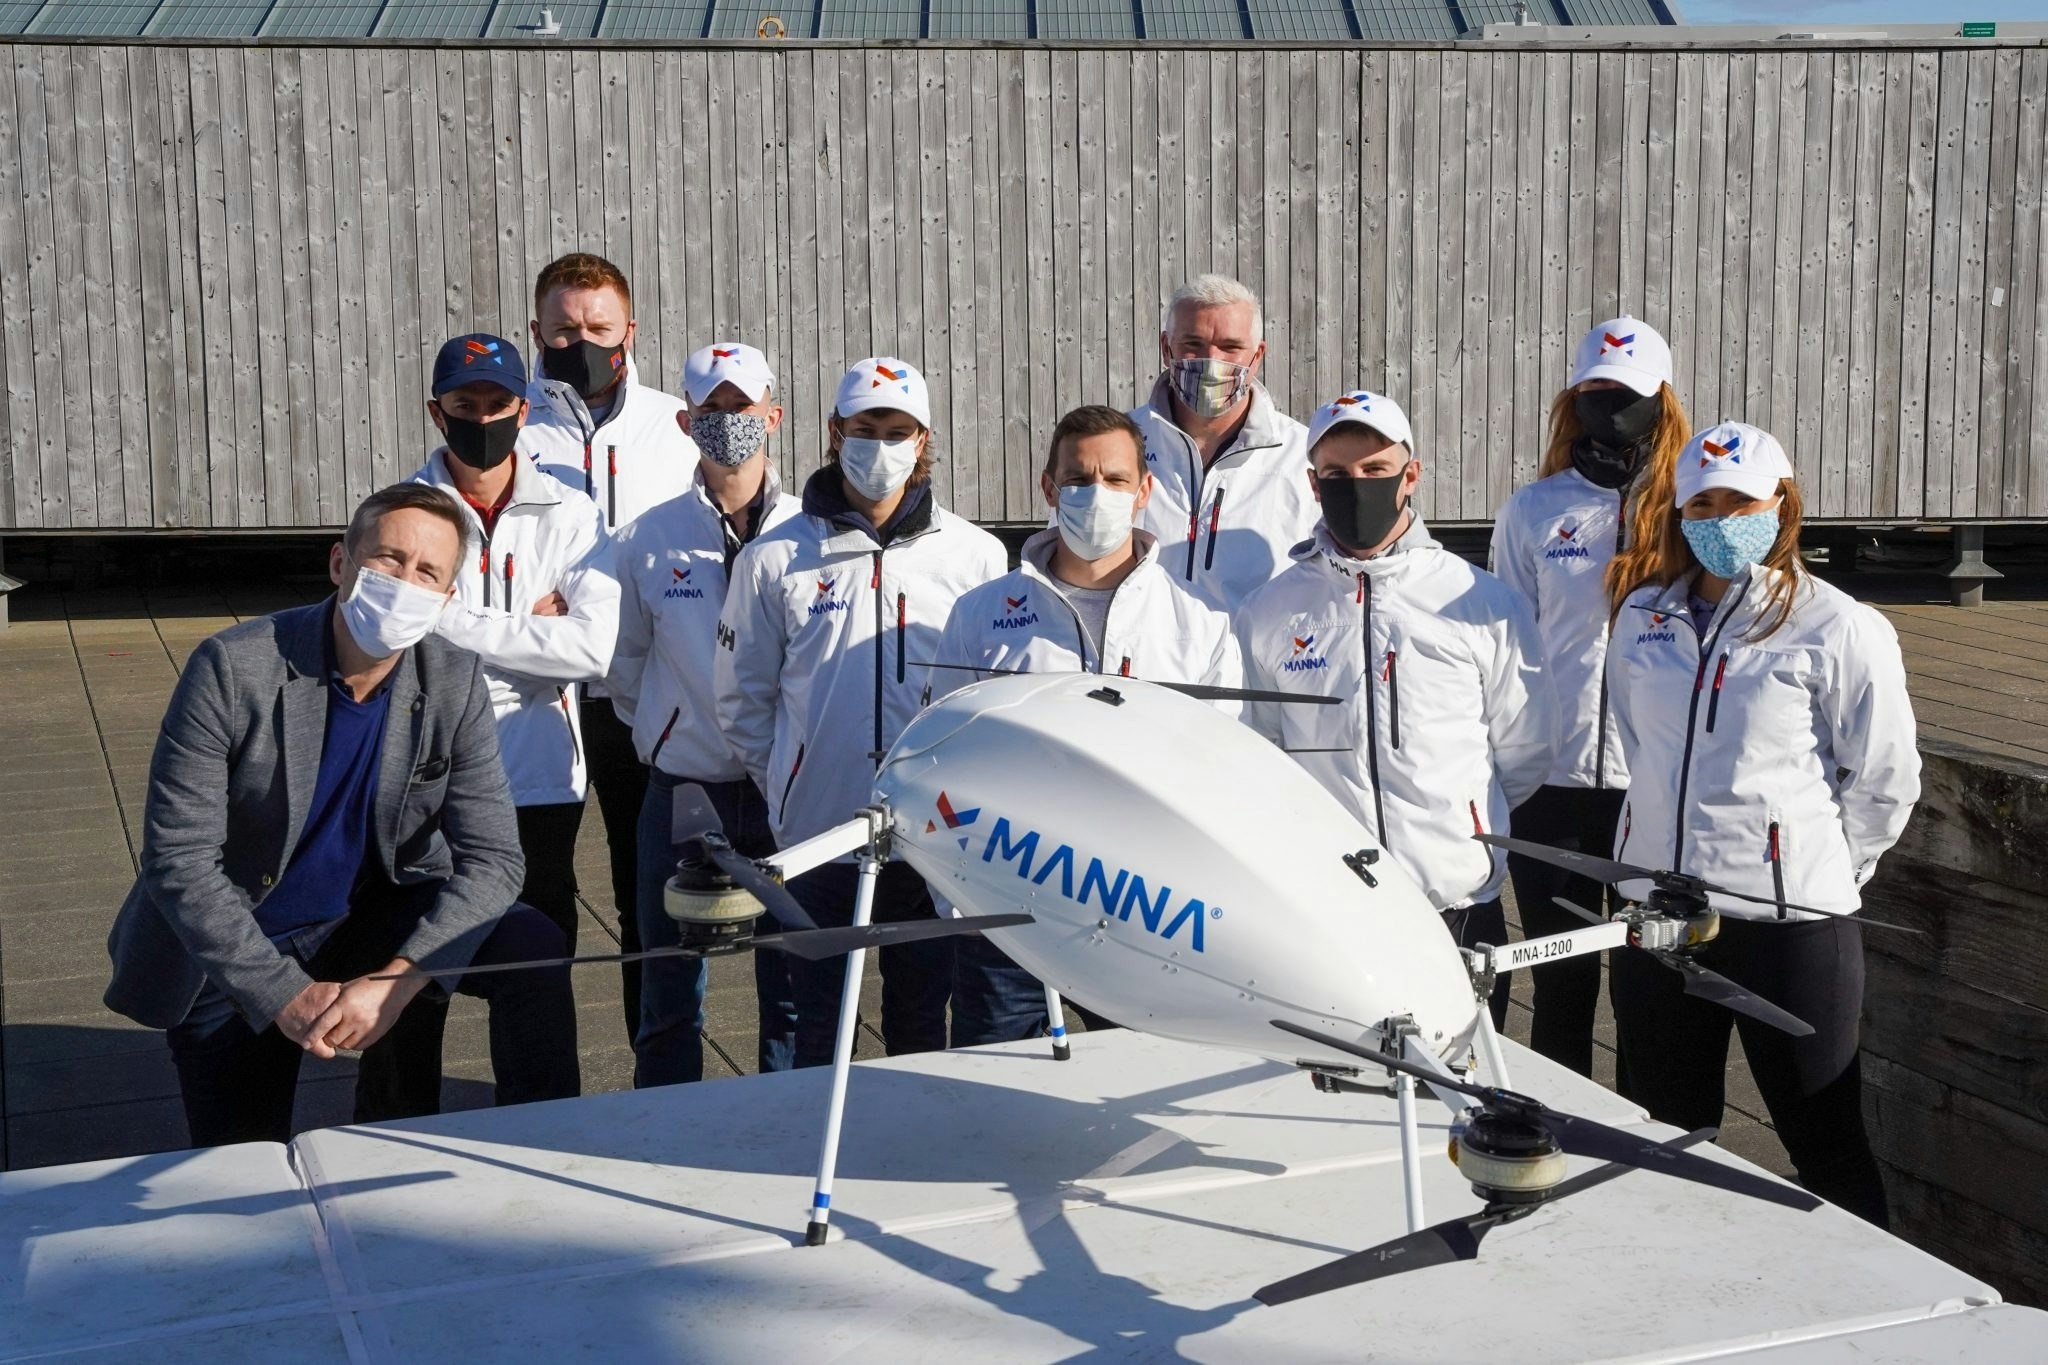 The Manna Aero team